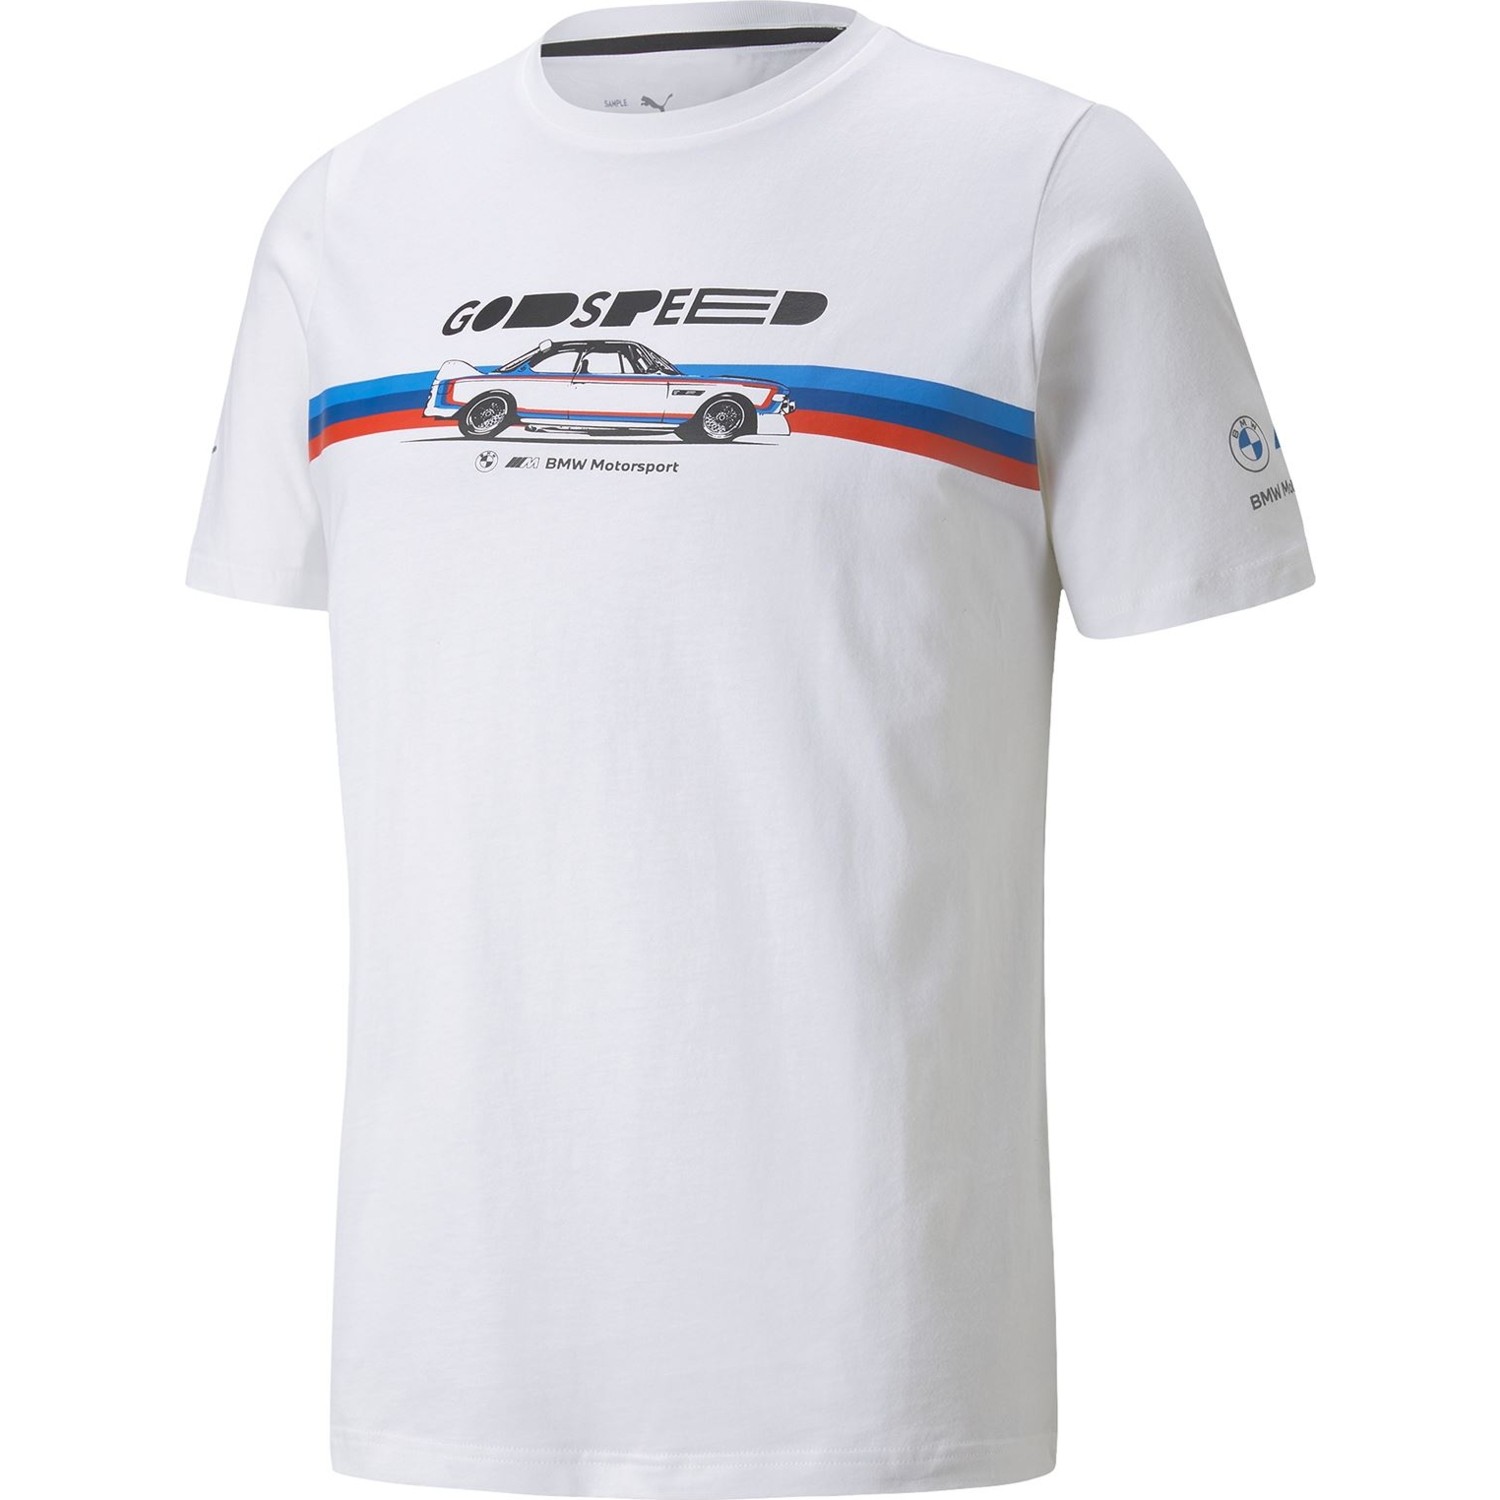 Puma BMW M Motorsport white T-shirt, men GRAPHIC CAR